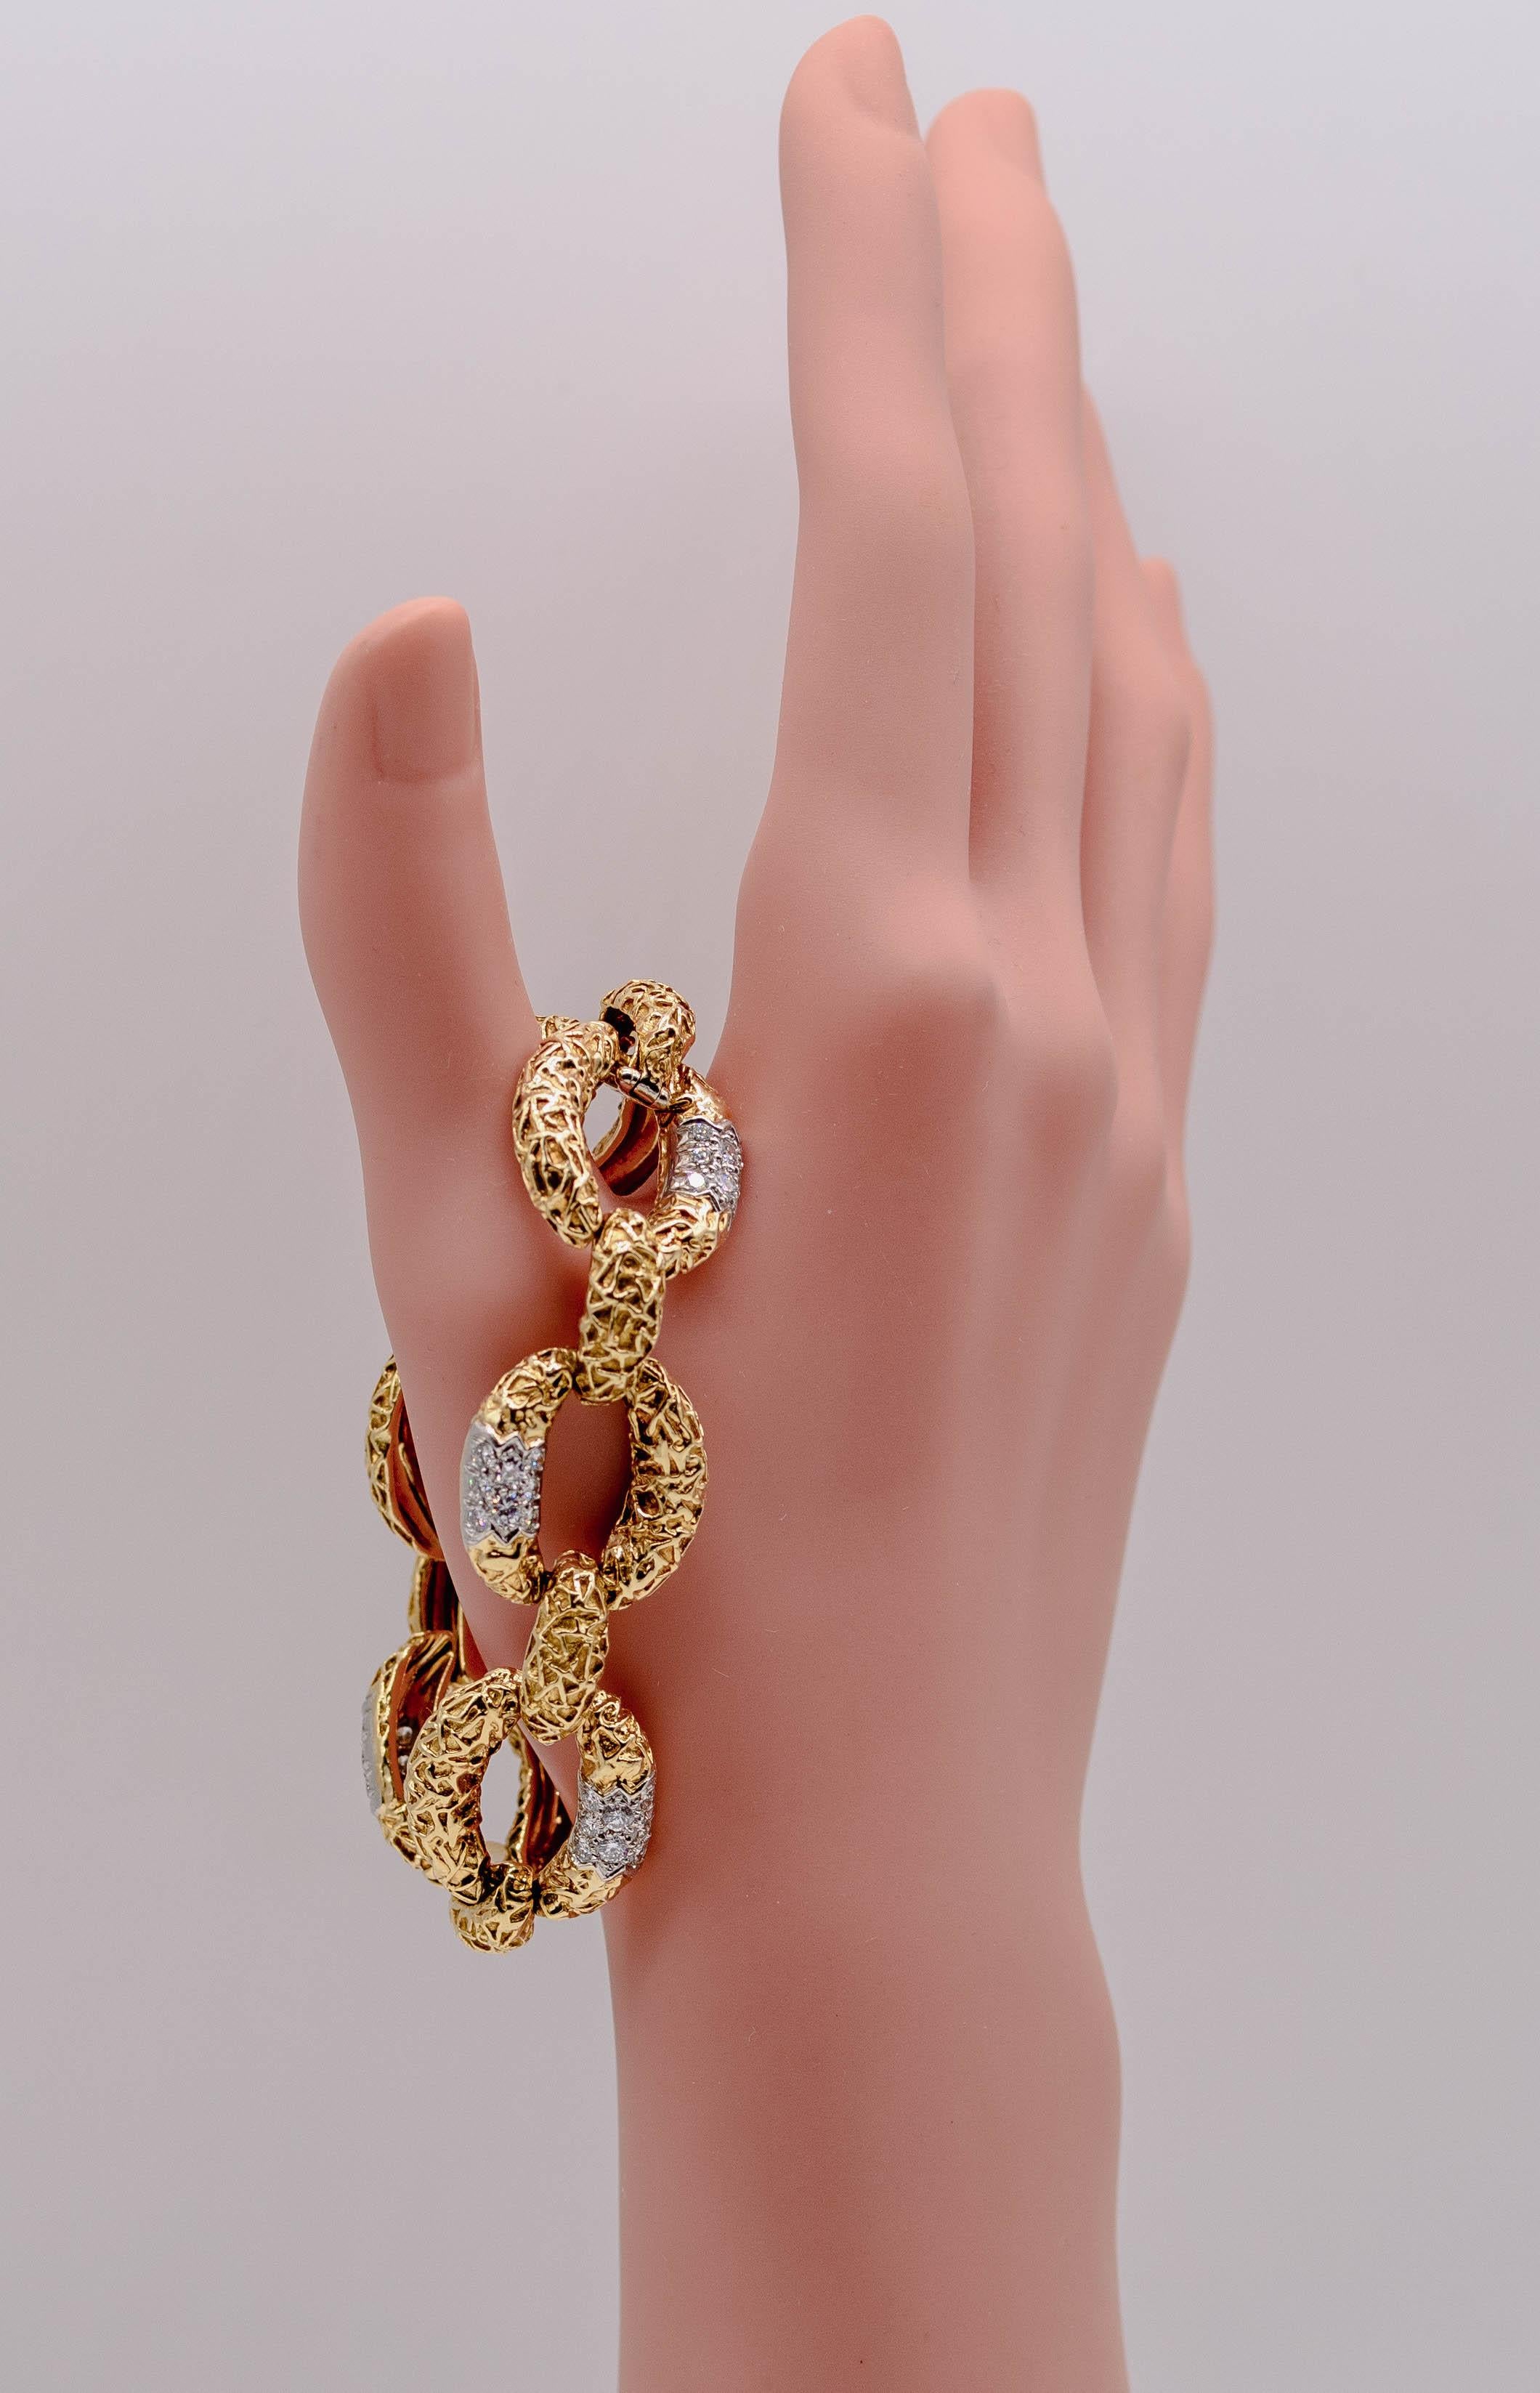 gold and diamond van cleef bracelet